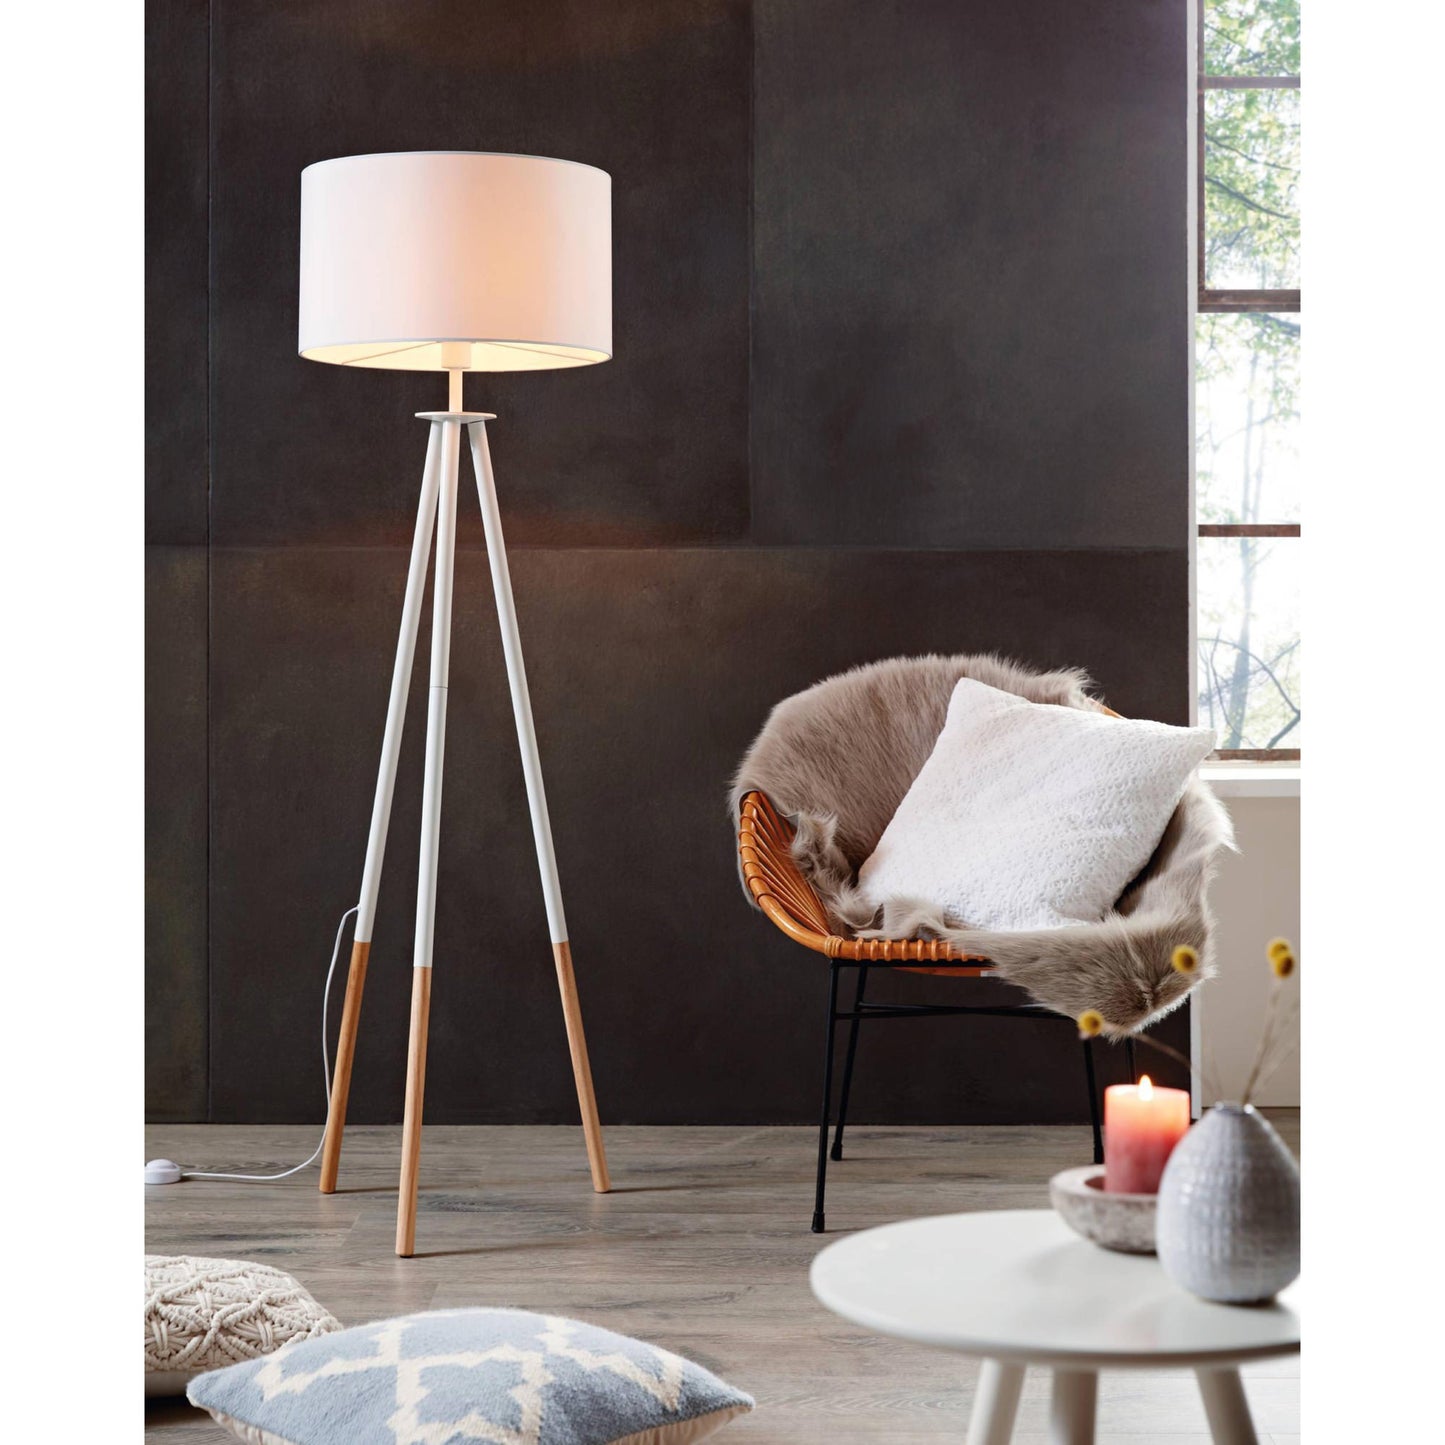 Bidford Wooden Tripod Floor Lamp, White